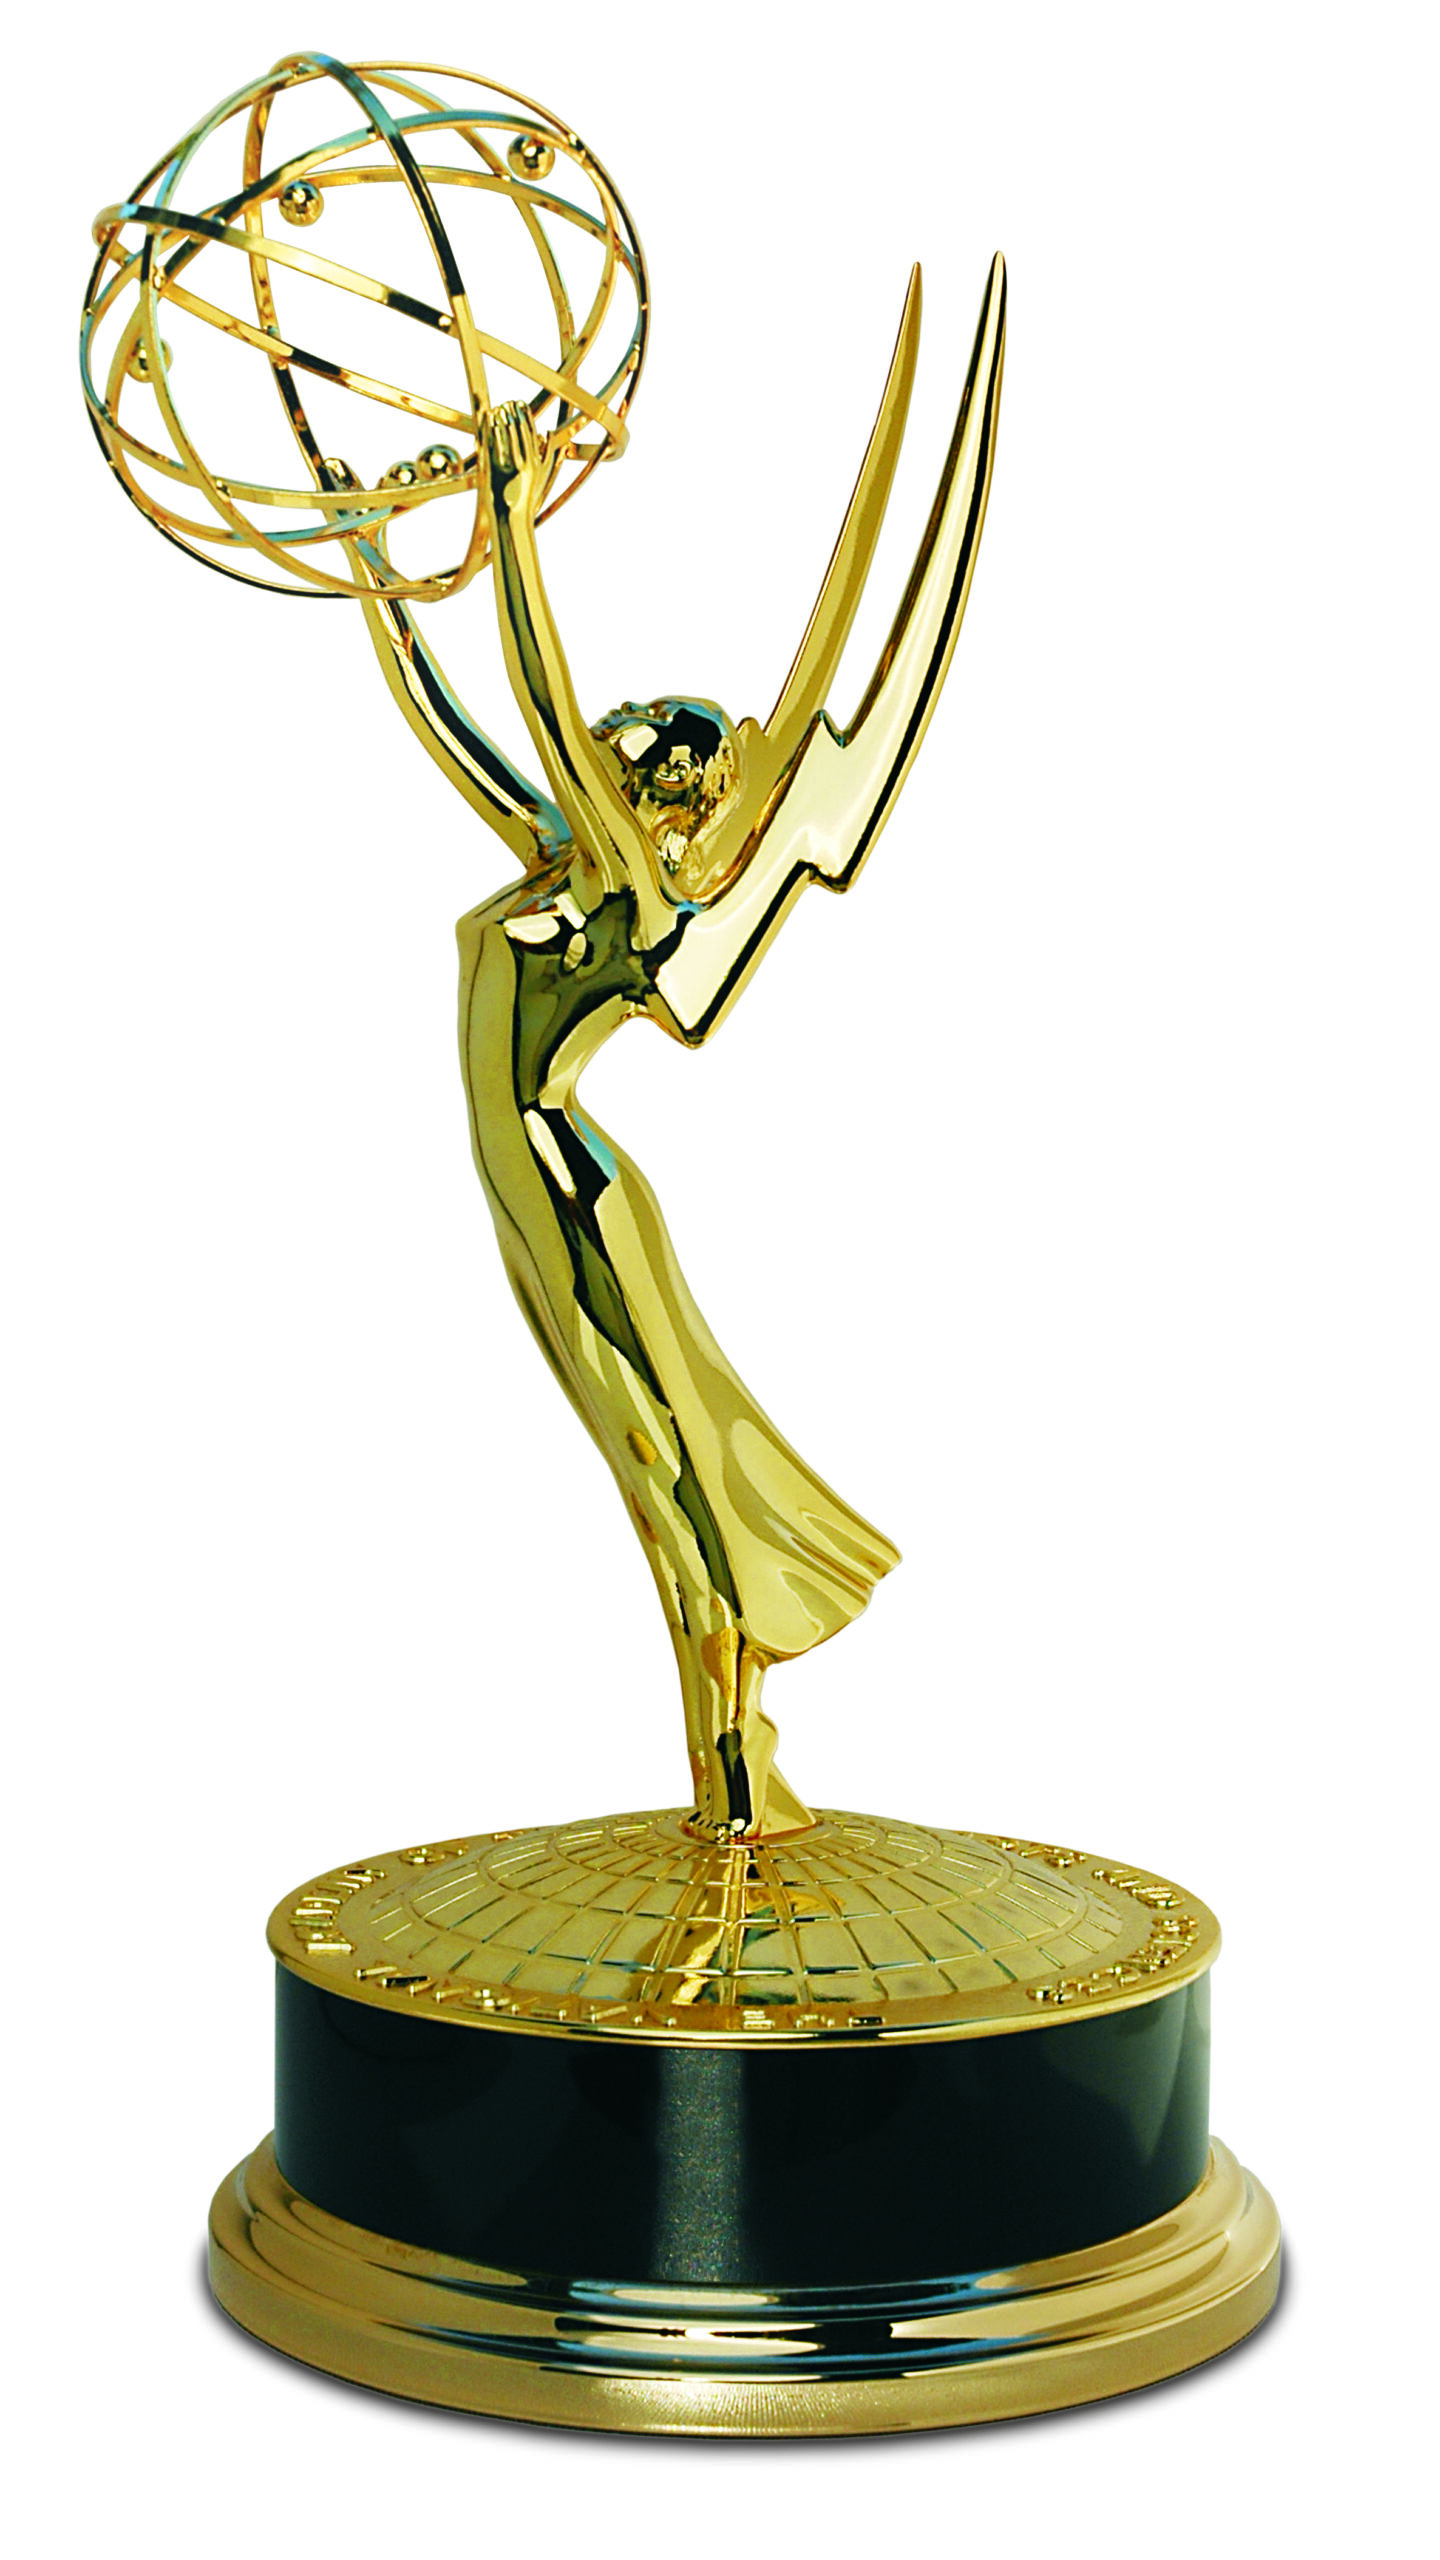 Harmonic Emmy Award